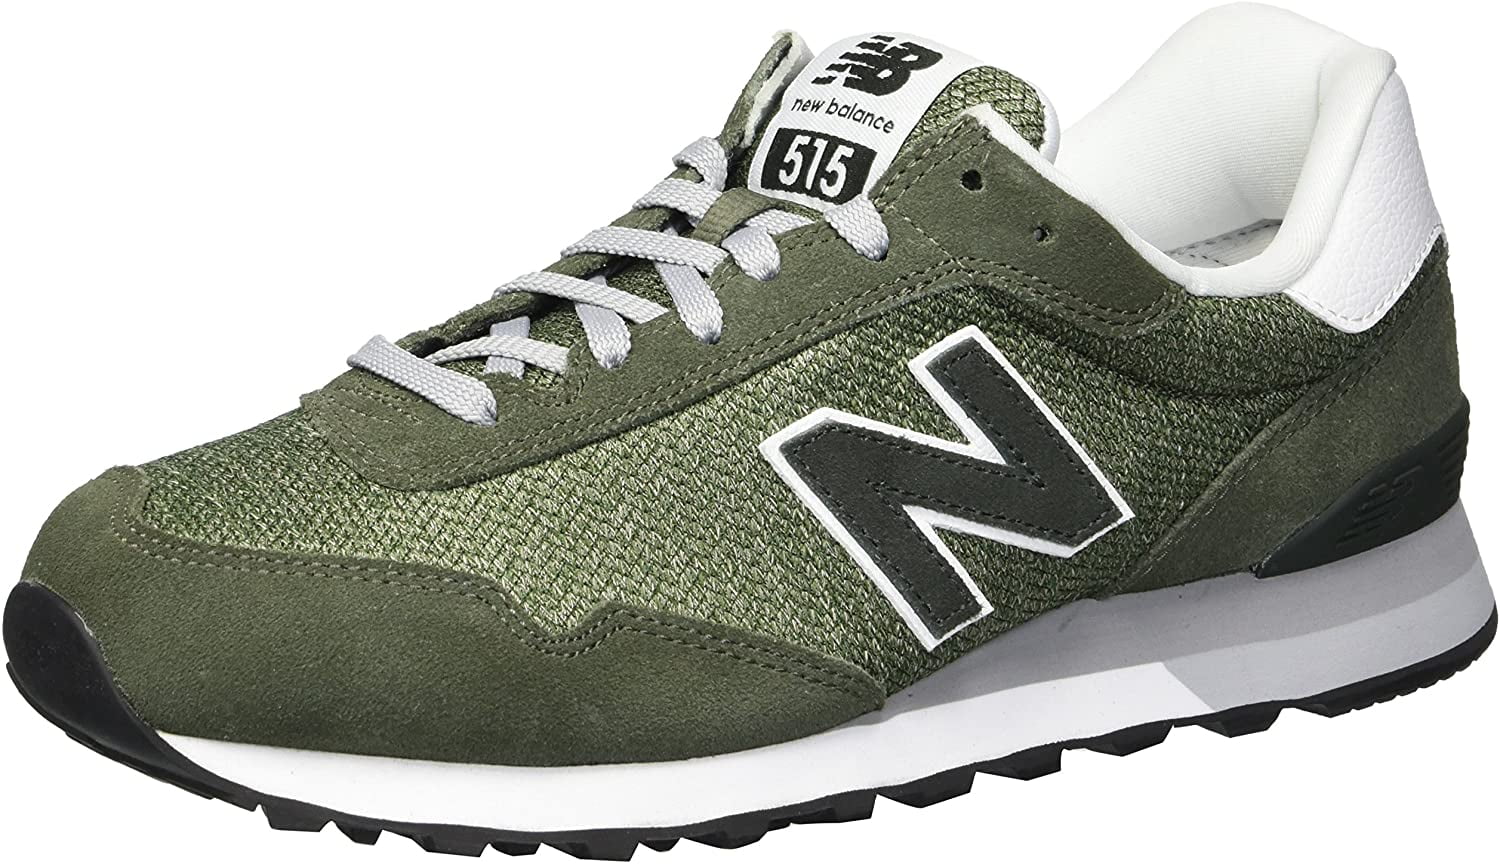 New Balance Men's 515v1 Sneaker, Dark Covert Green, 17 D US | Walmart Canada